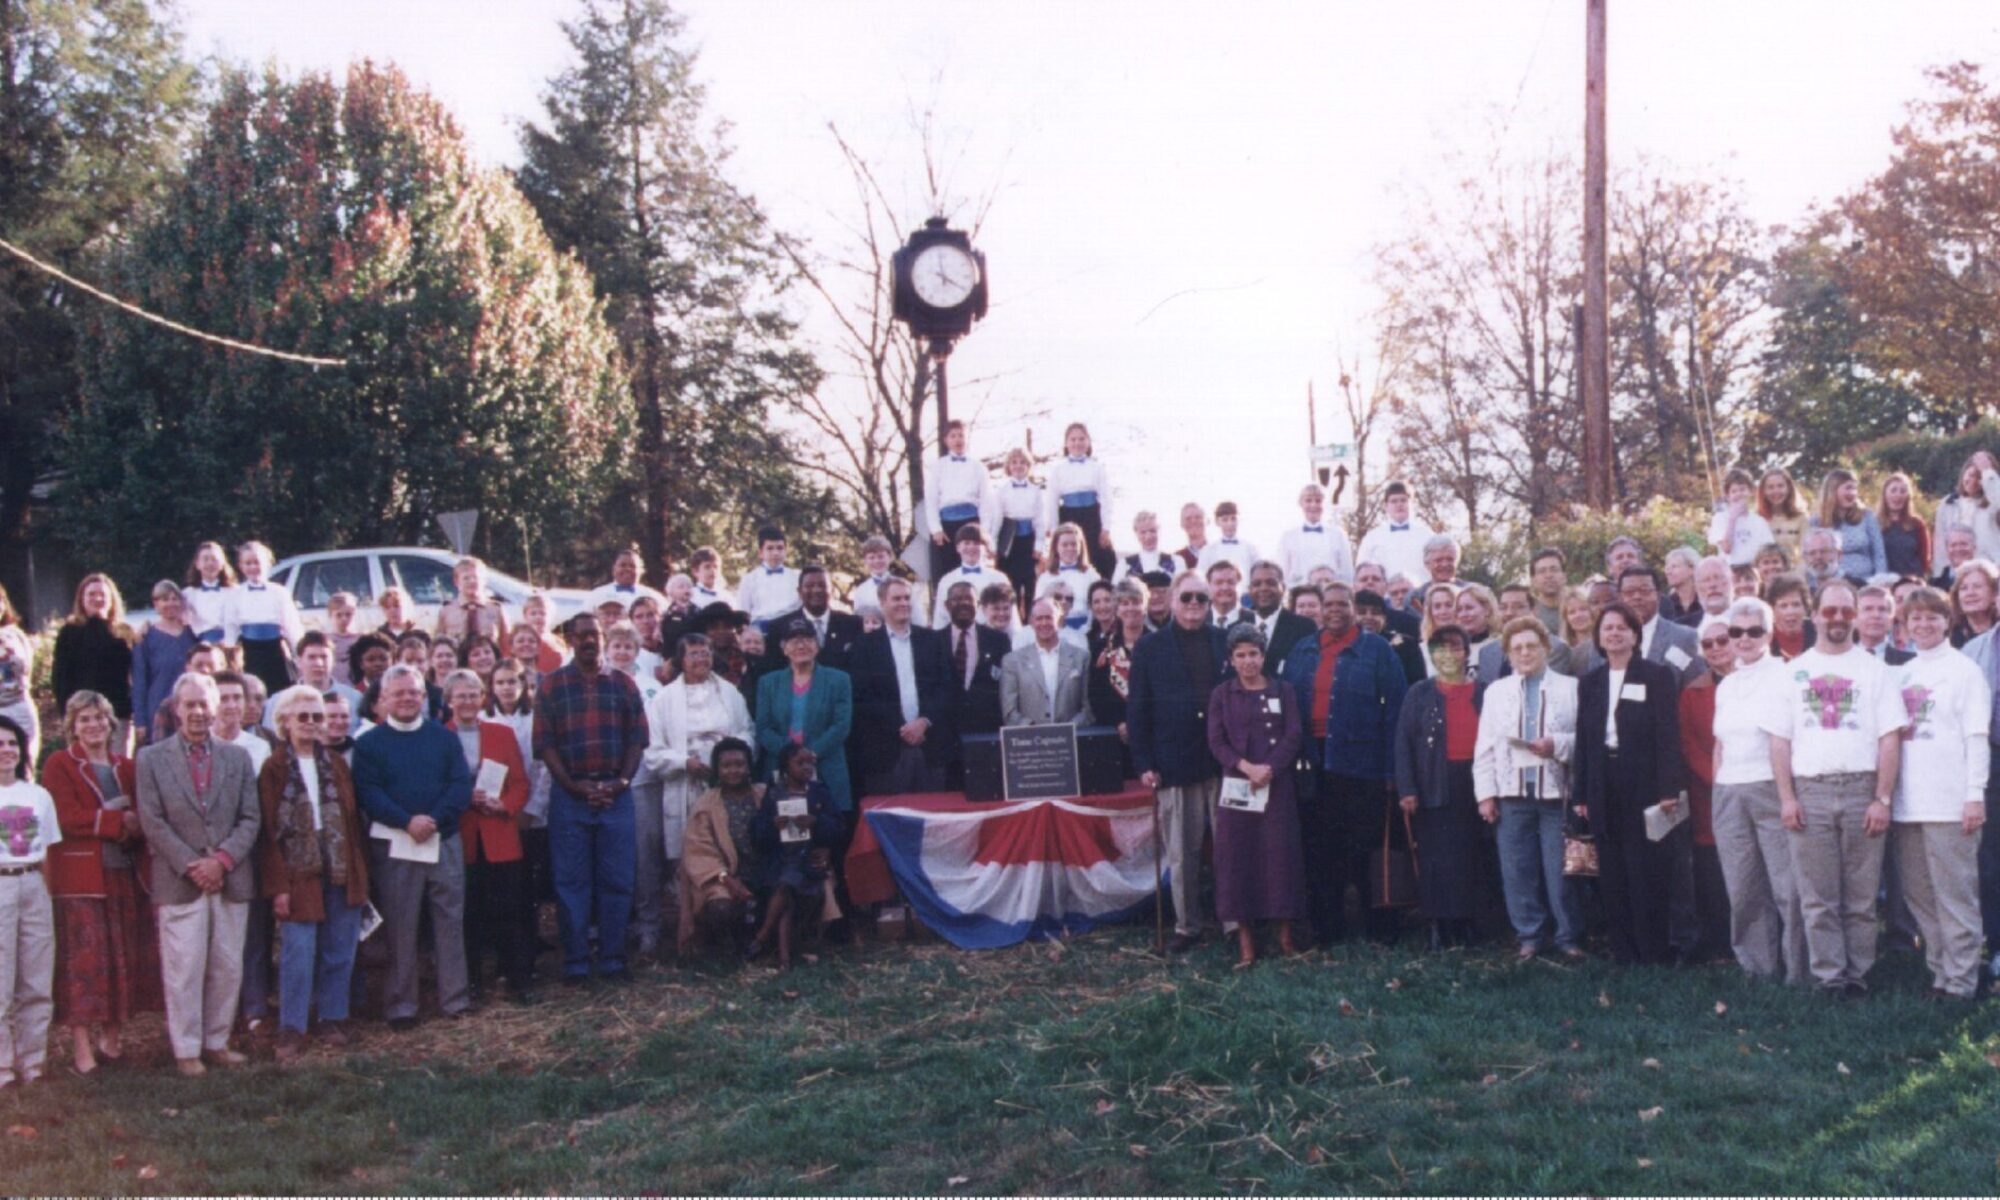 Dedication of Grace Court clock, November 2000